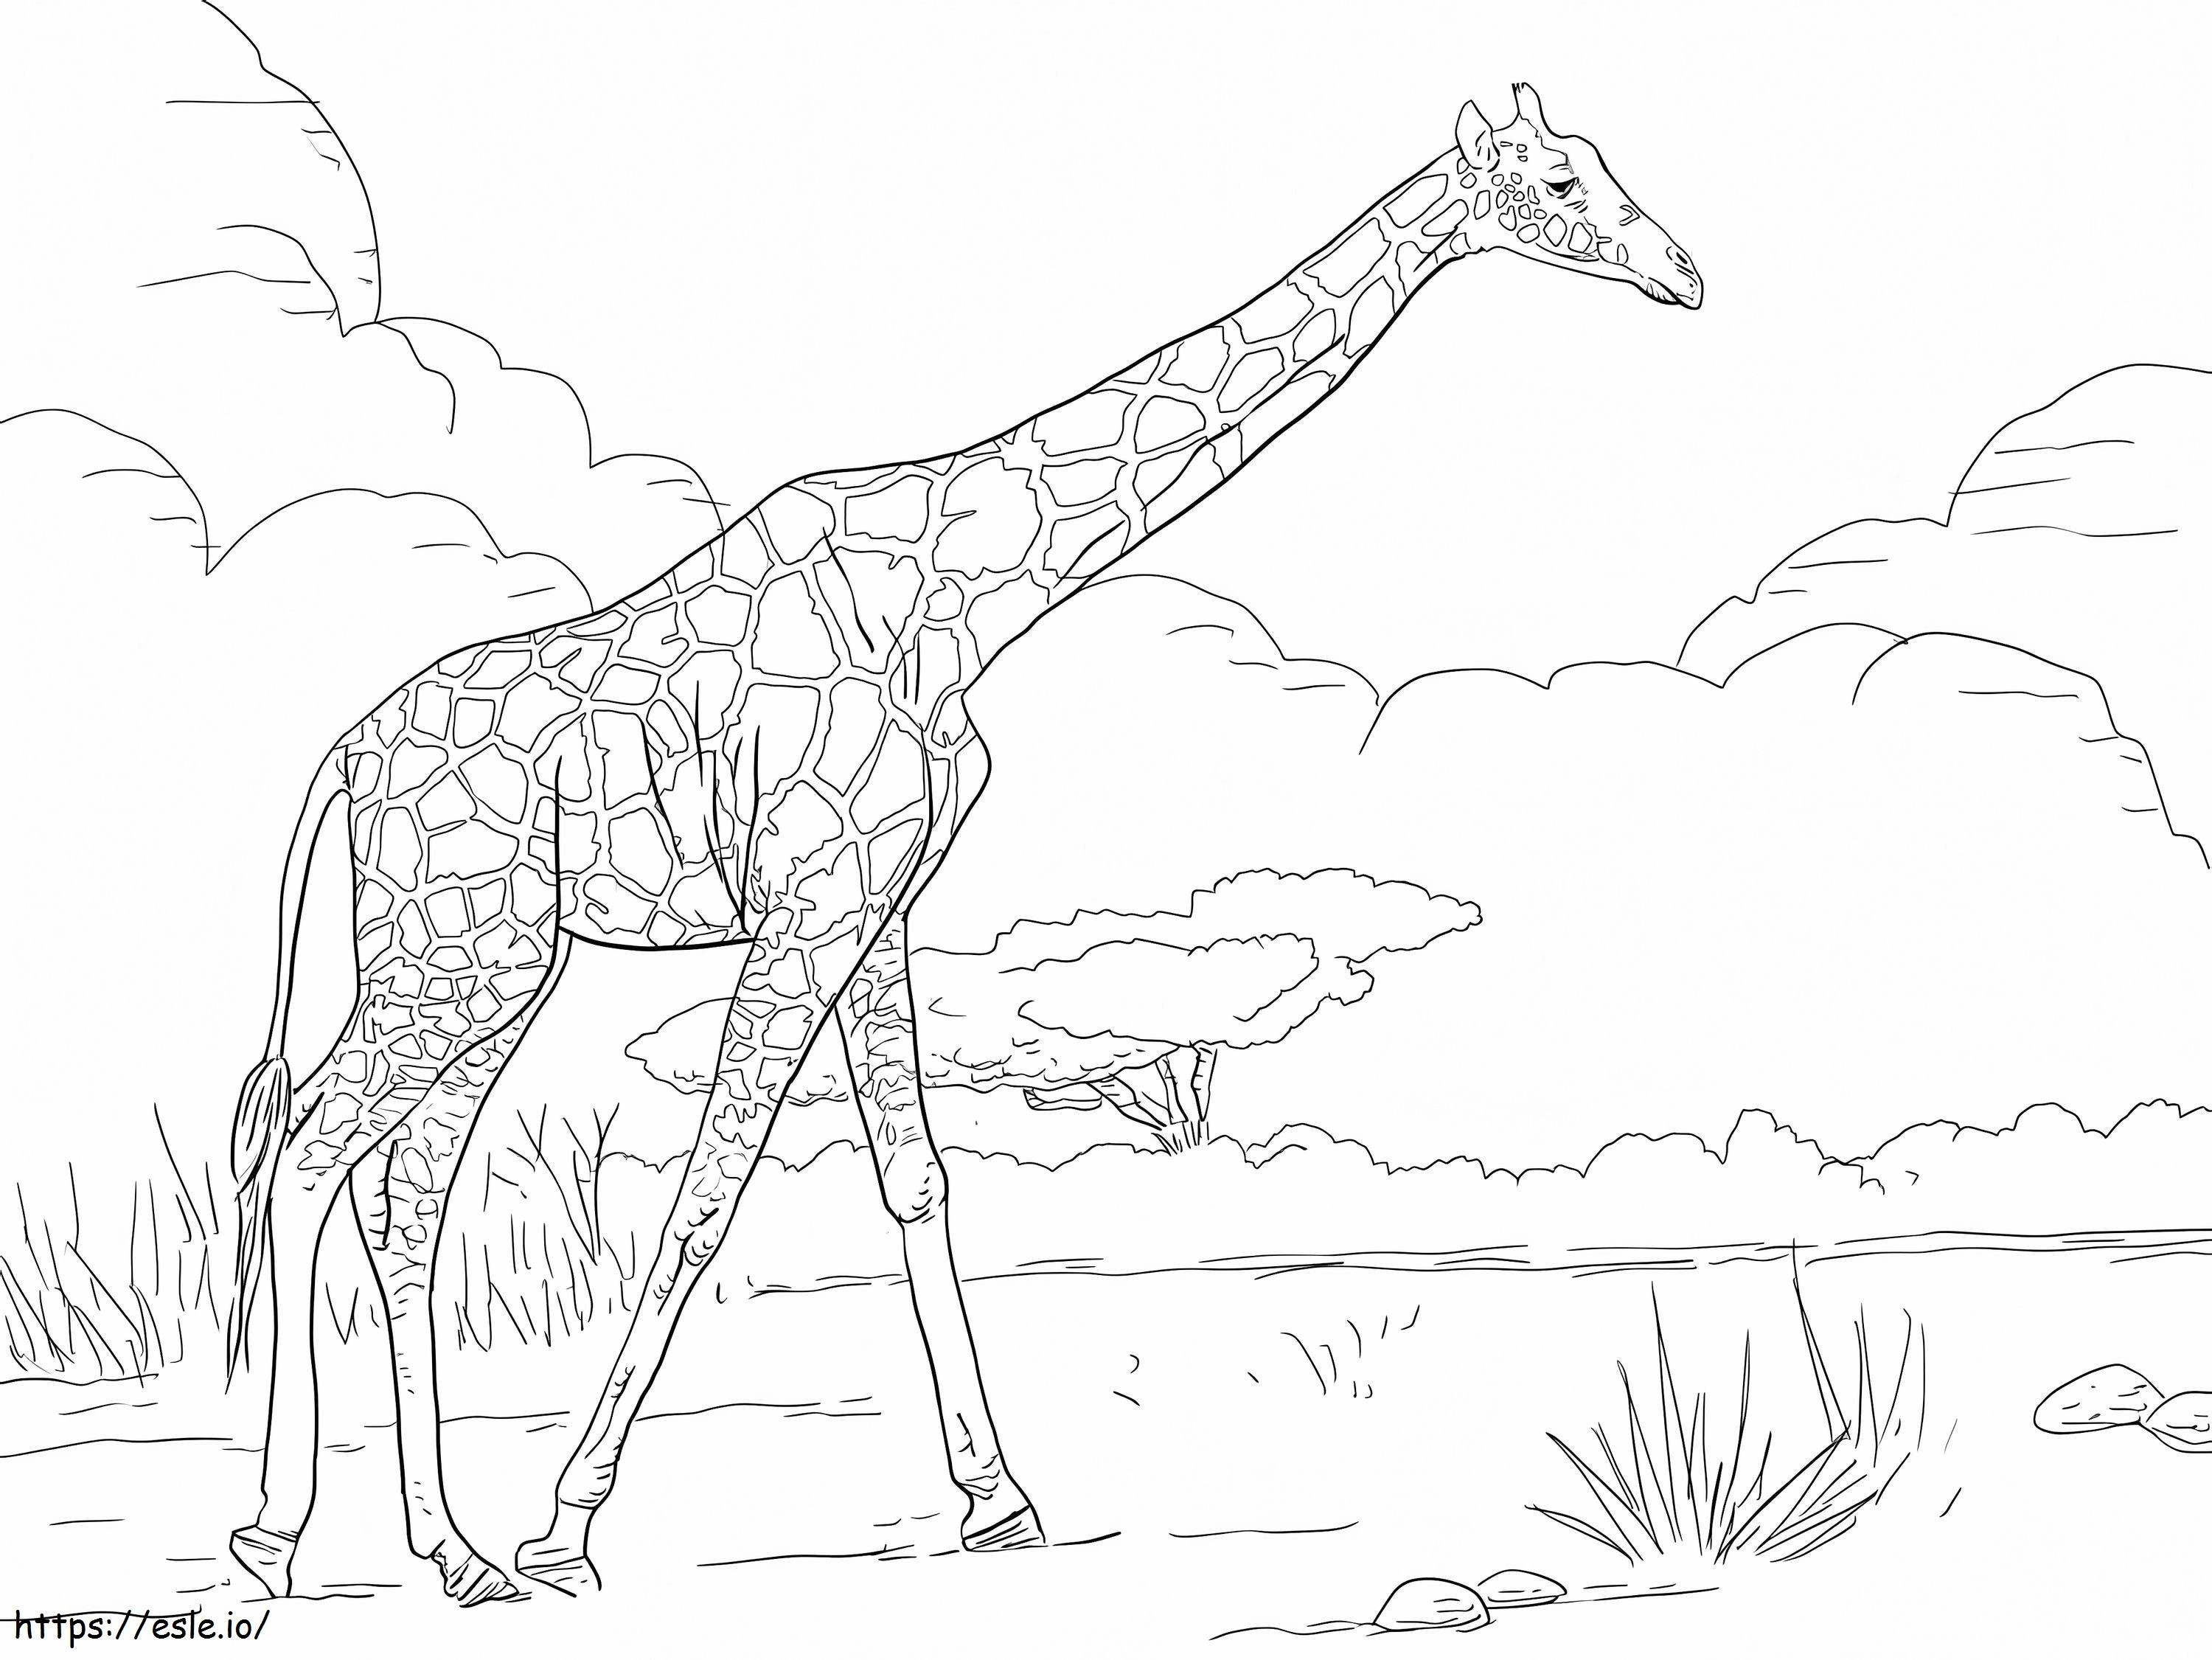 Giraffe Free Printable coloring page